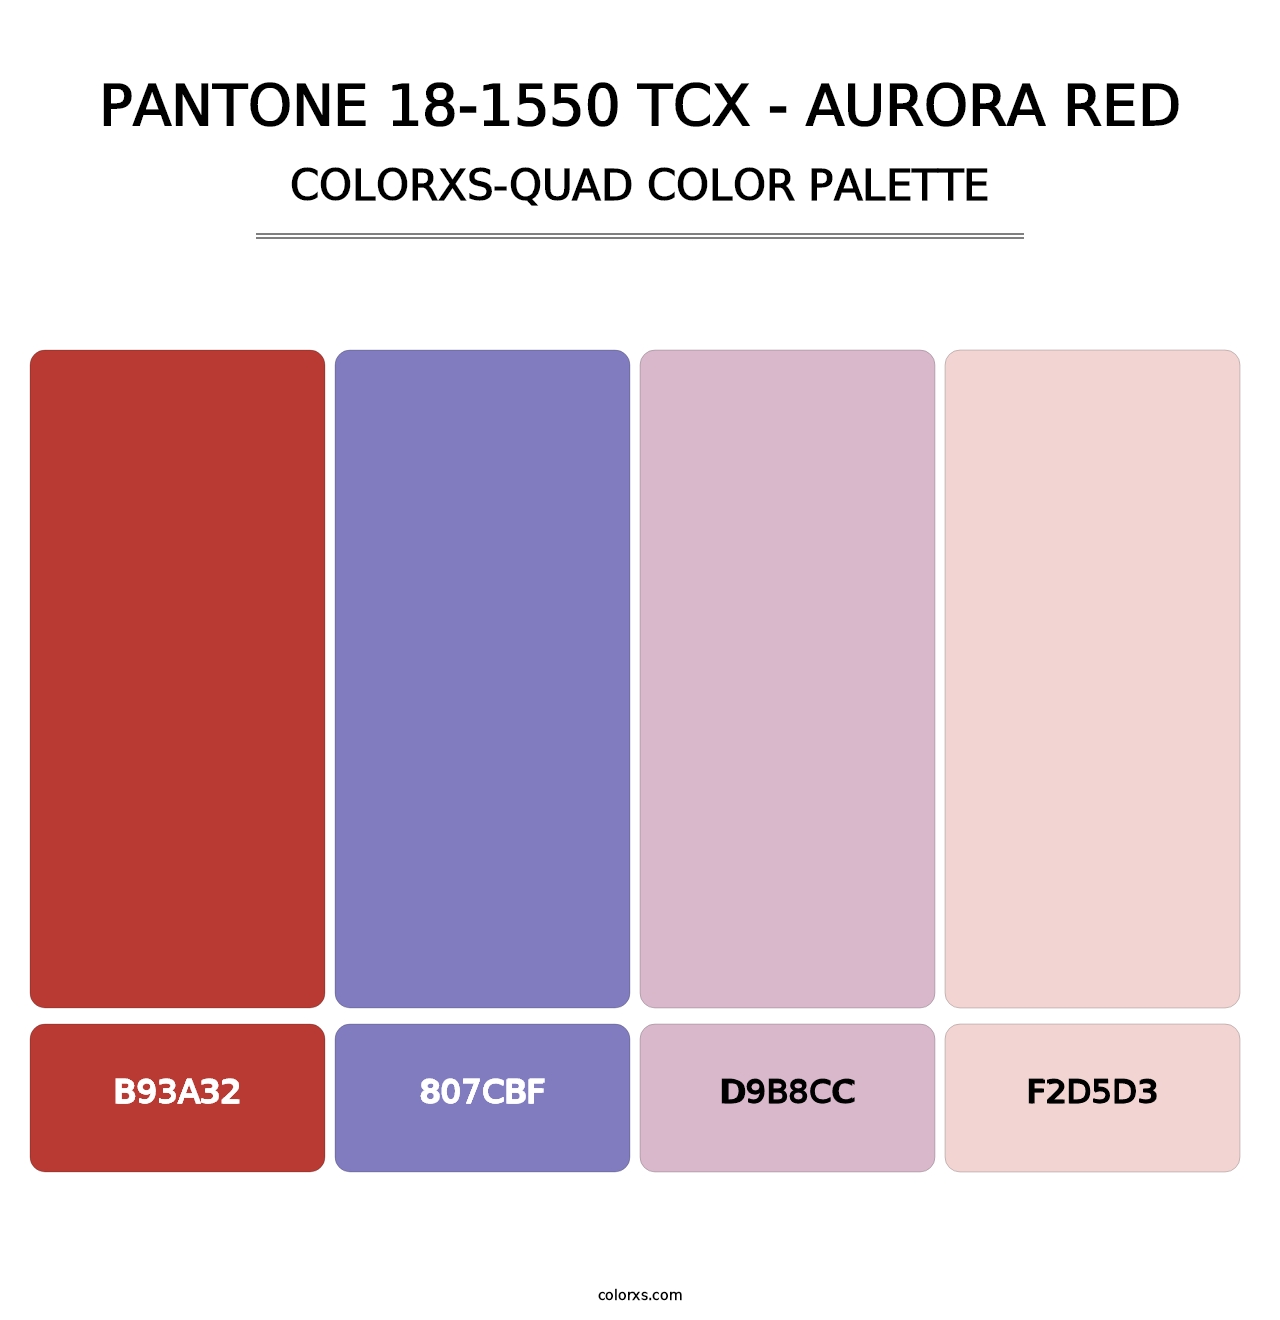 PANTONE 18-1550 TCX - Aurora Red - Colorxs Quad Palette